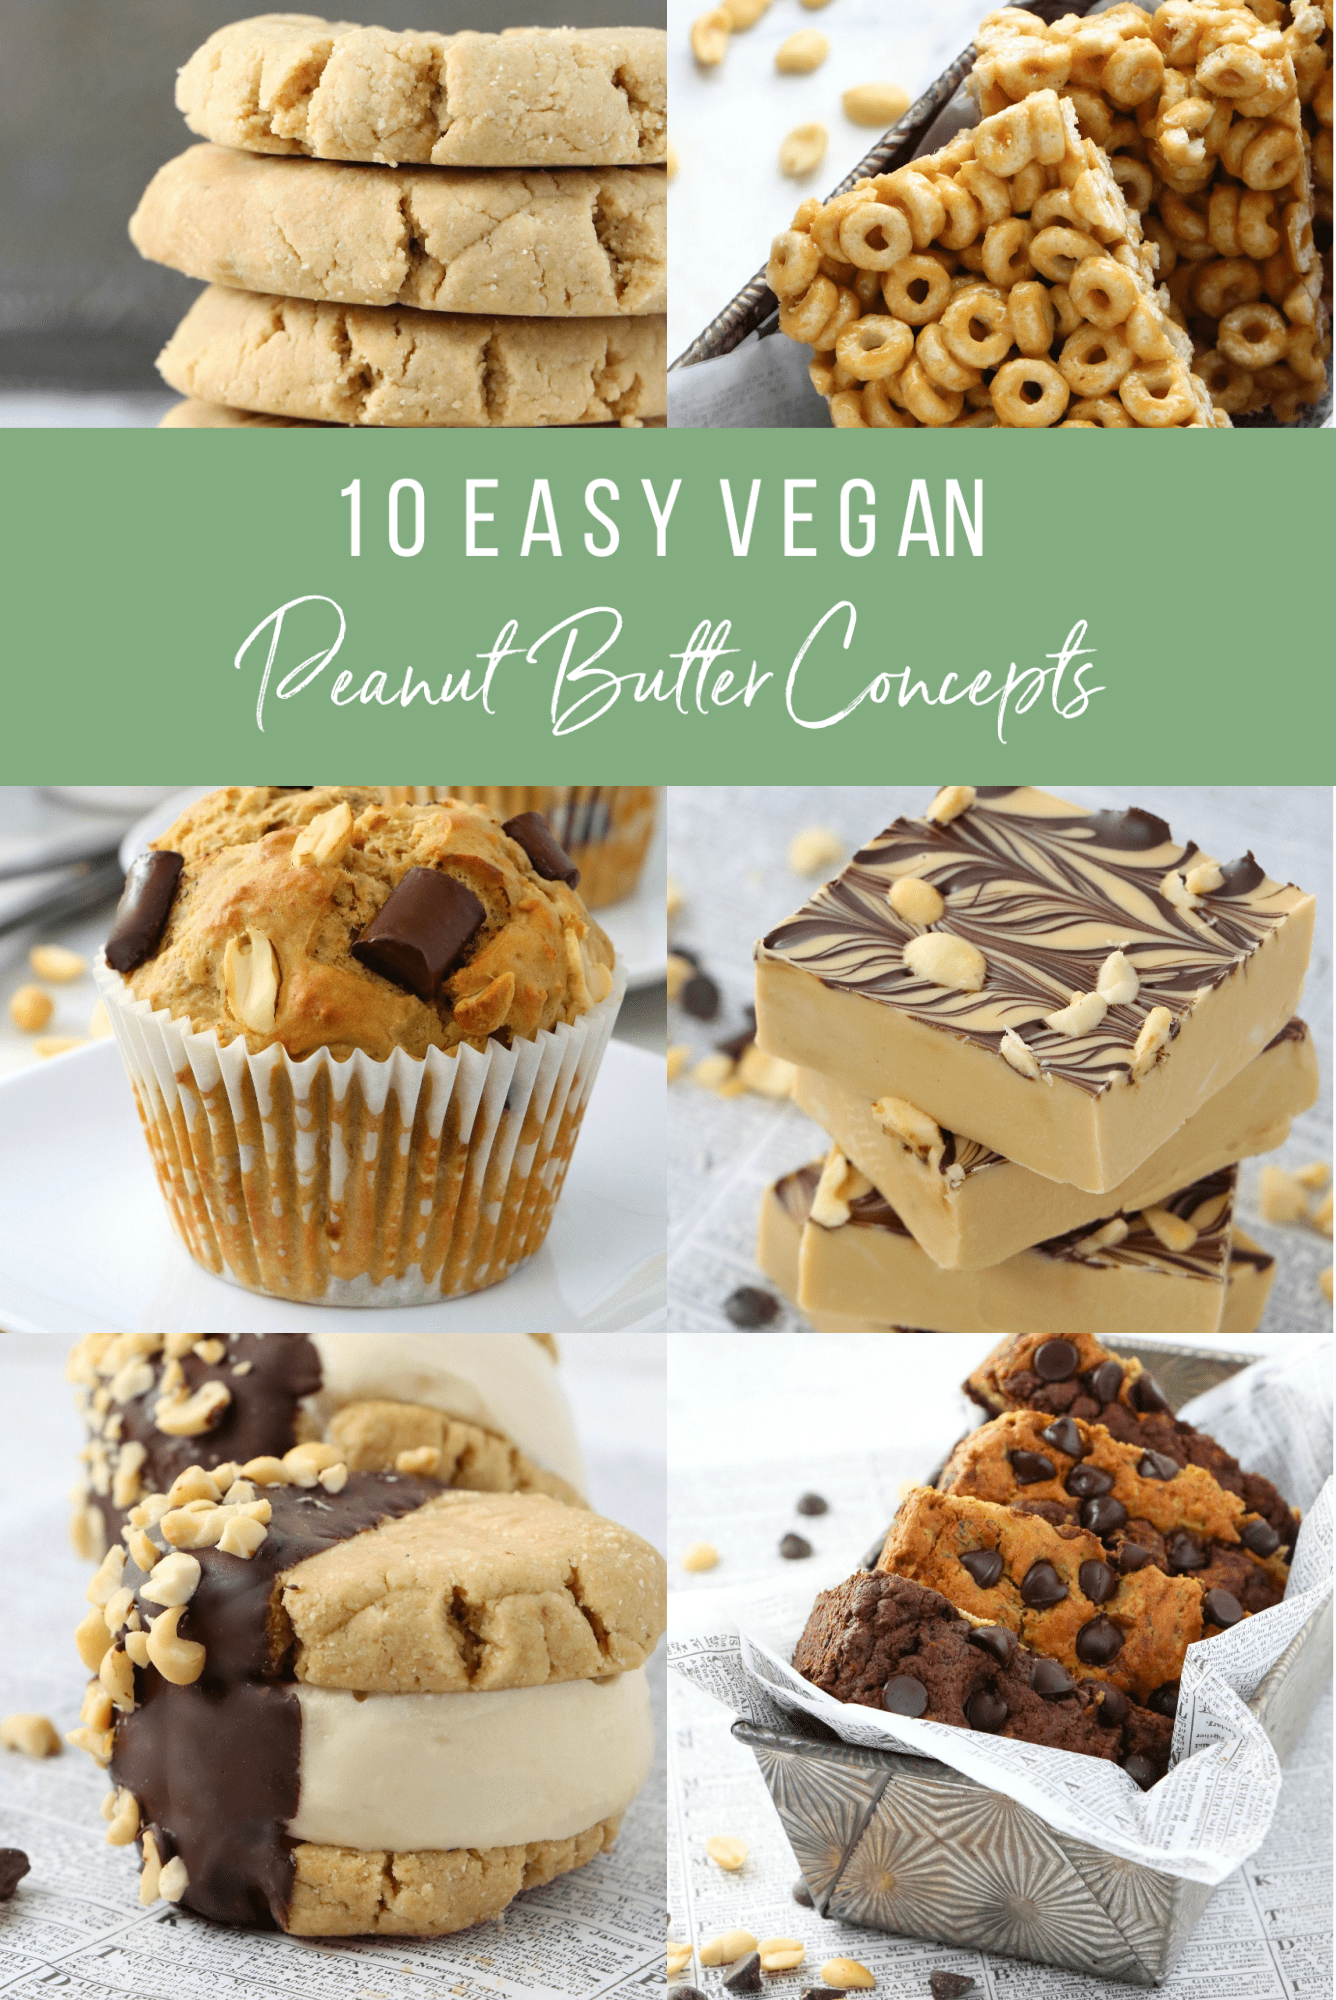 10 Vegan Peanut Butter Concepts